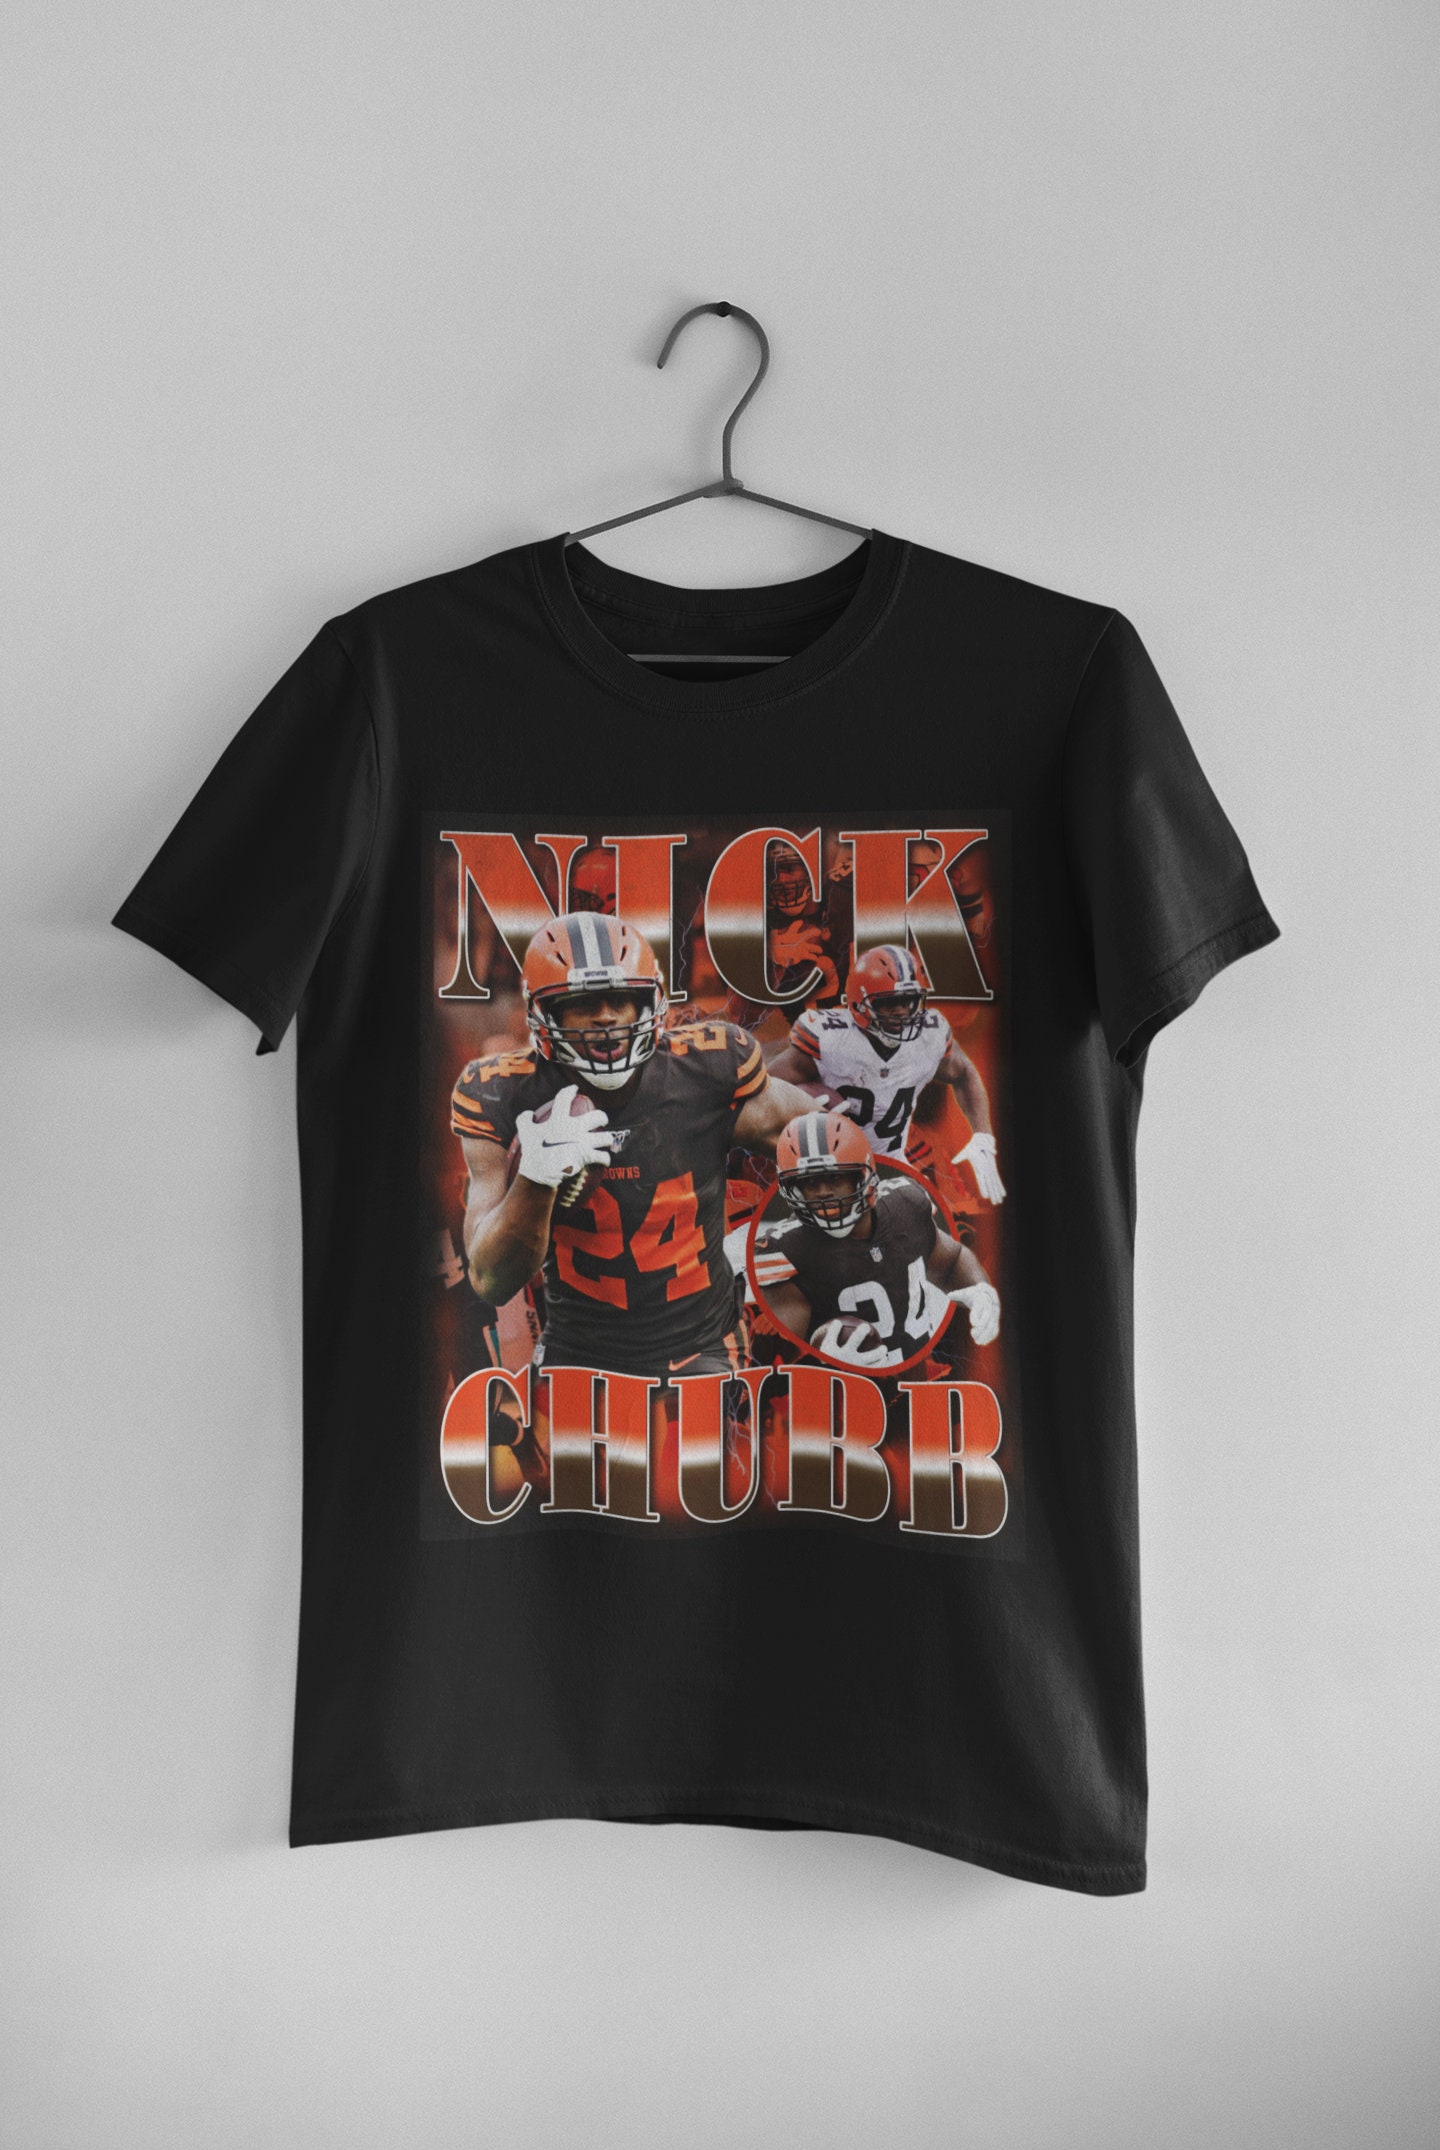 Discover NICK CHUBB - Cleveland Browns shirt